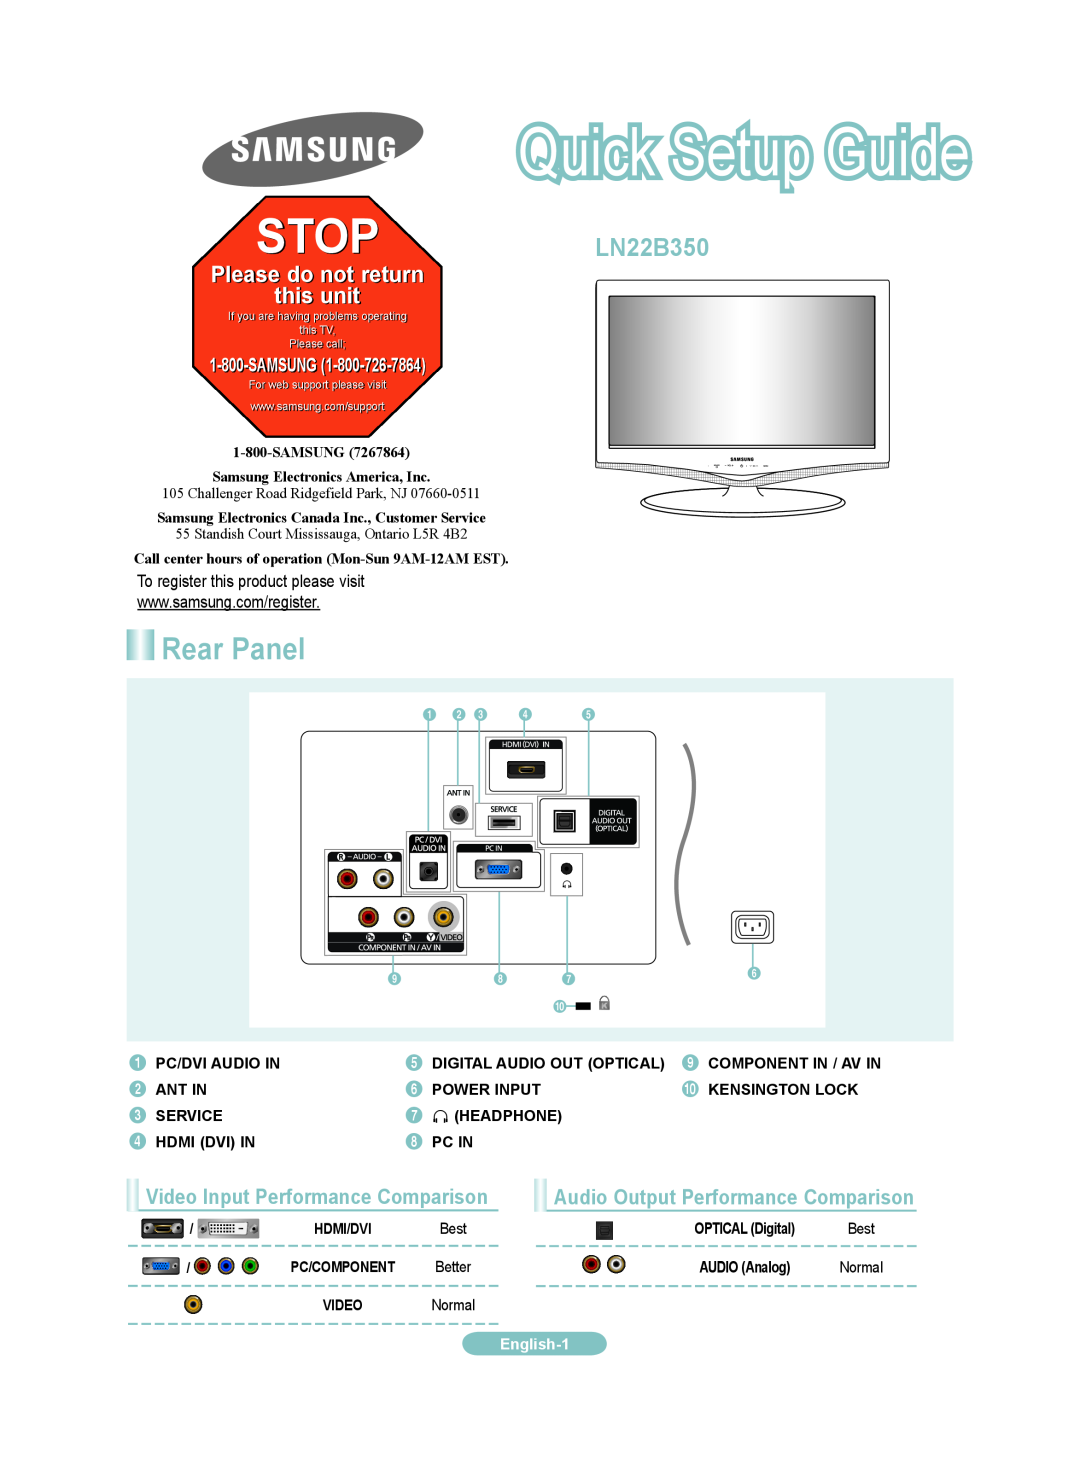 Samsung BN68-01976J-00 setup guide Quick Setup Guide, Rear Panel, STOP LNB0, Please do not return this unit, English-1 